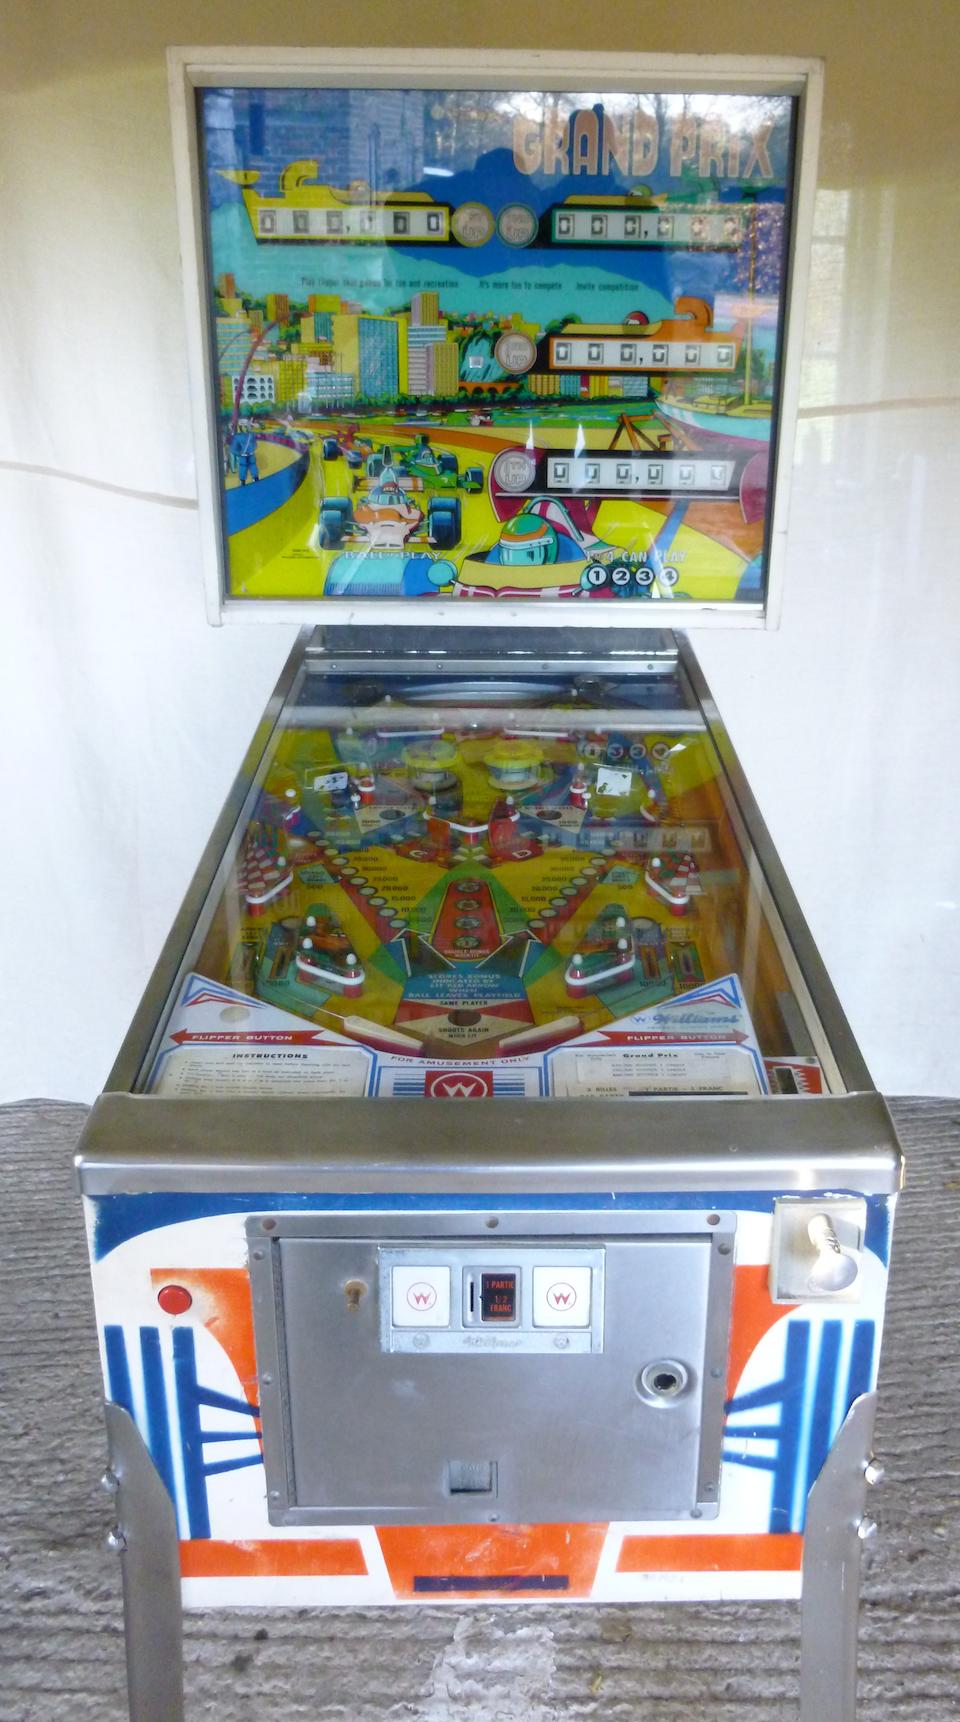 A 'Grand Prix' pinball machine by Williams Electronics Inc. of Chicago, 1970s, ((Qty))